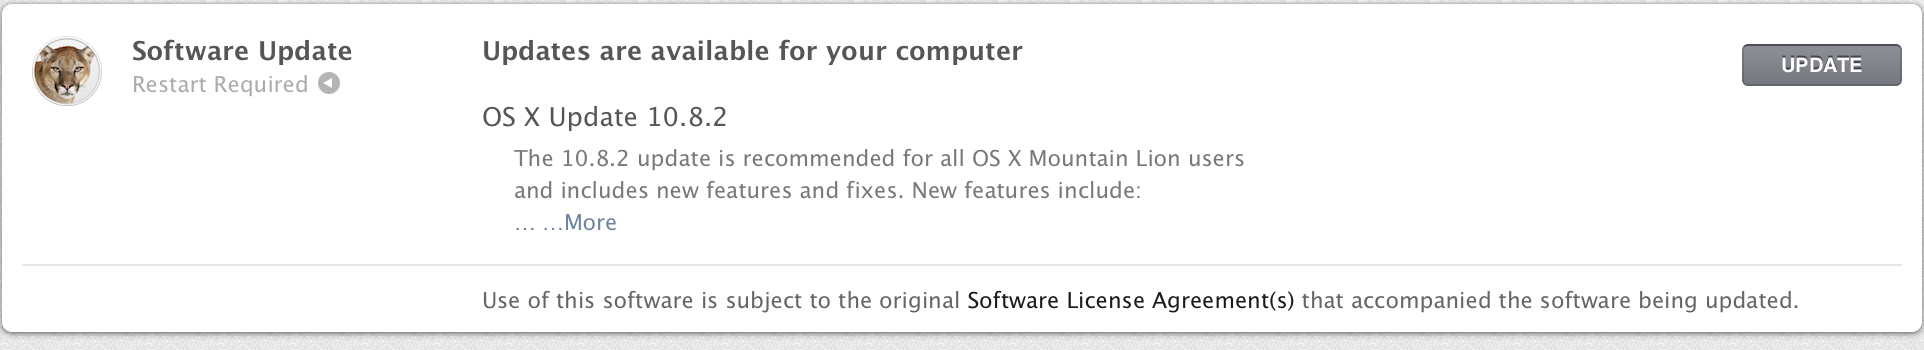 upgrade mac 10.7.5 to 10.8